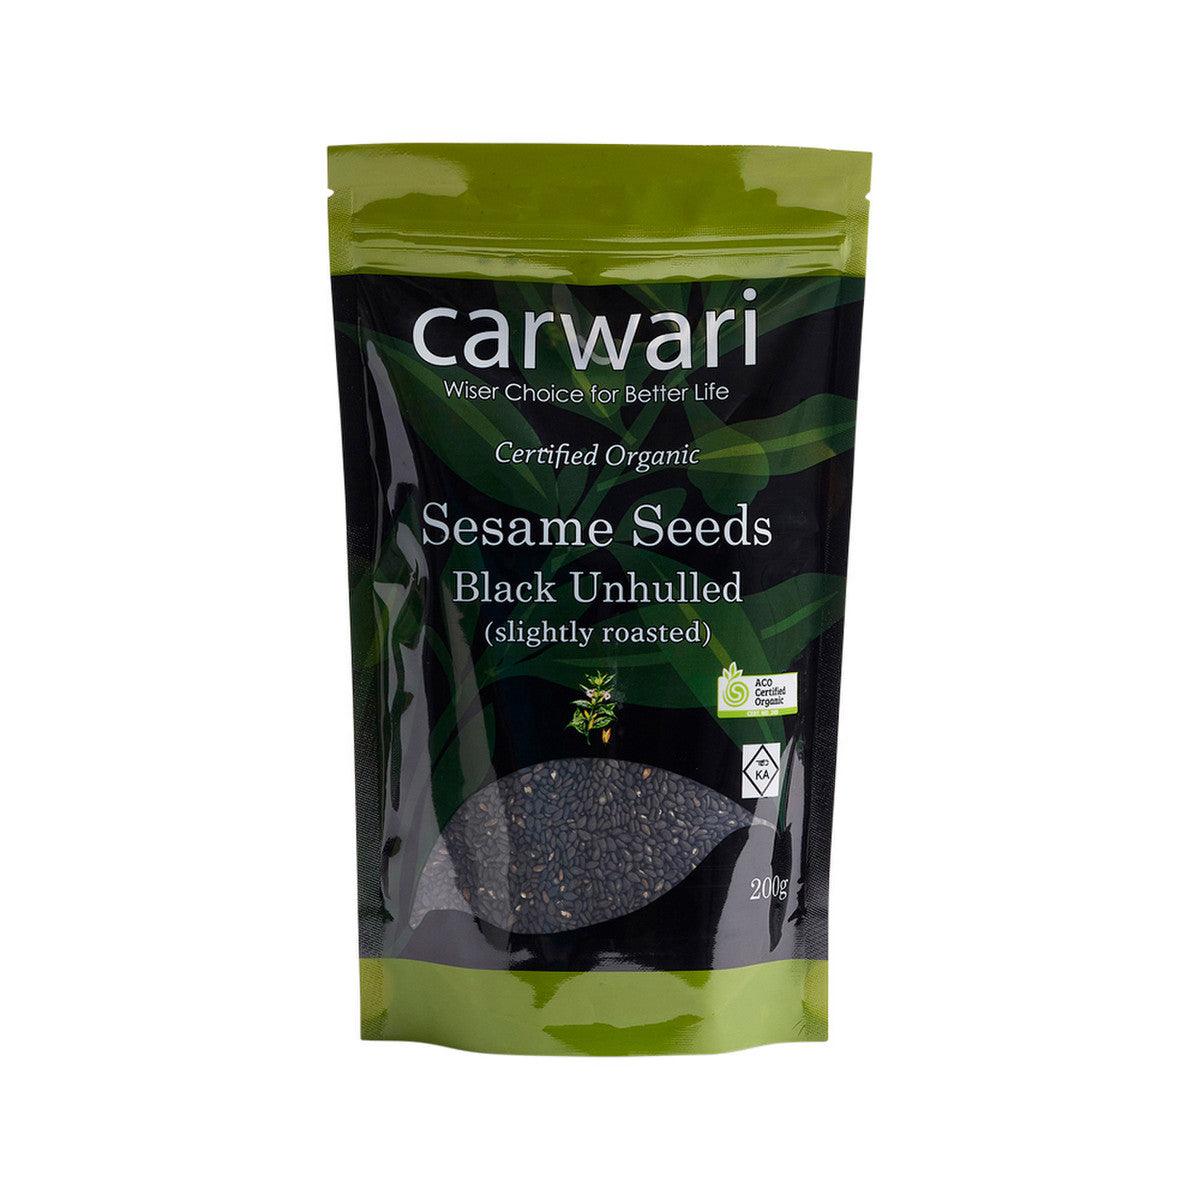 Carwari Sesame Seeds Black Unhulled Organic 200g - QVM Vitamins™